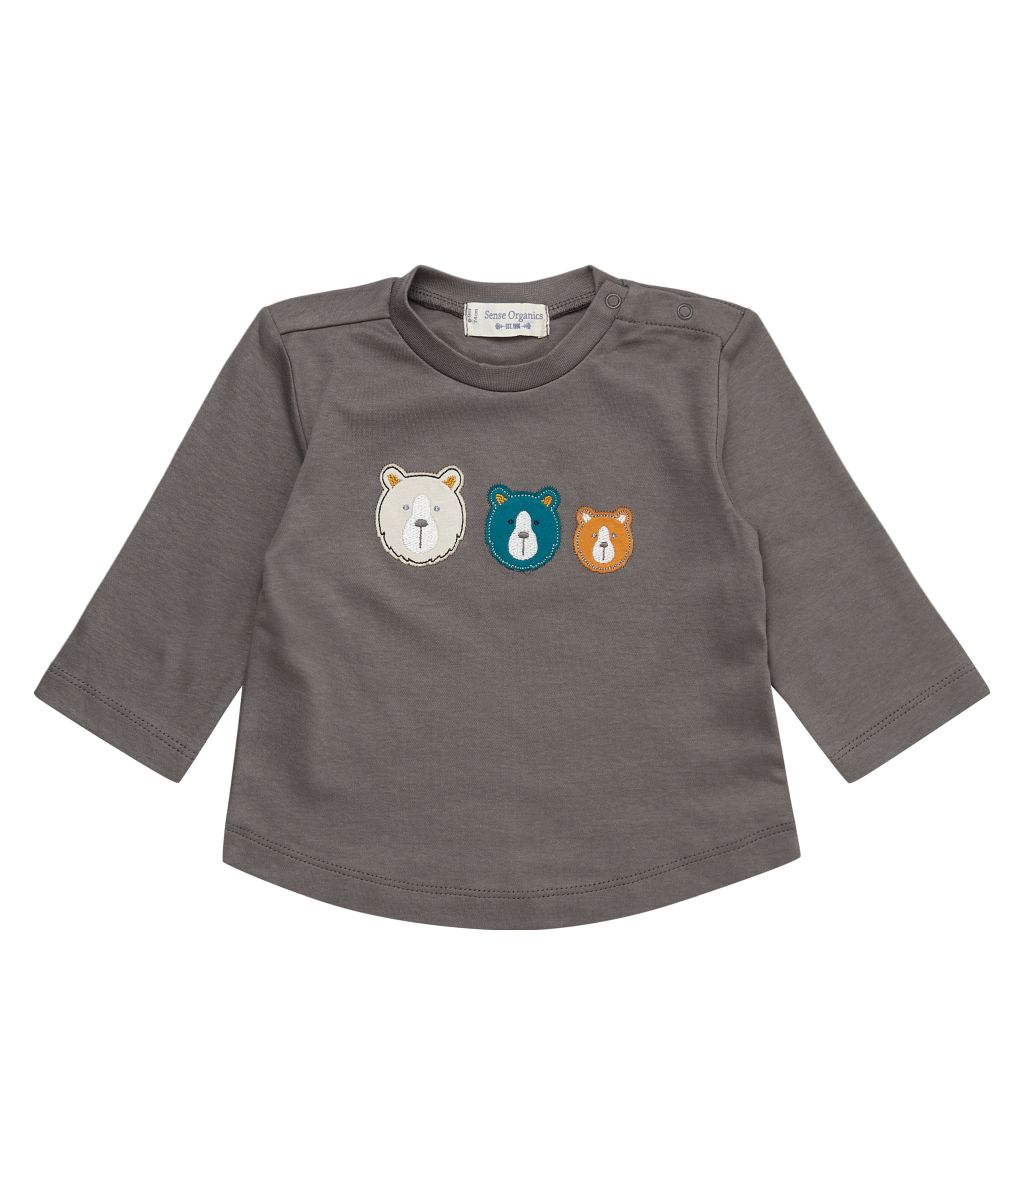 Chesmu Baby Shirt L/S dark grey+bear heads applic